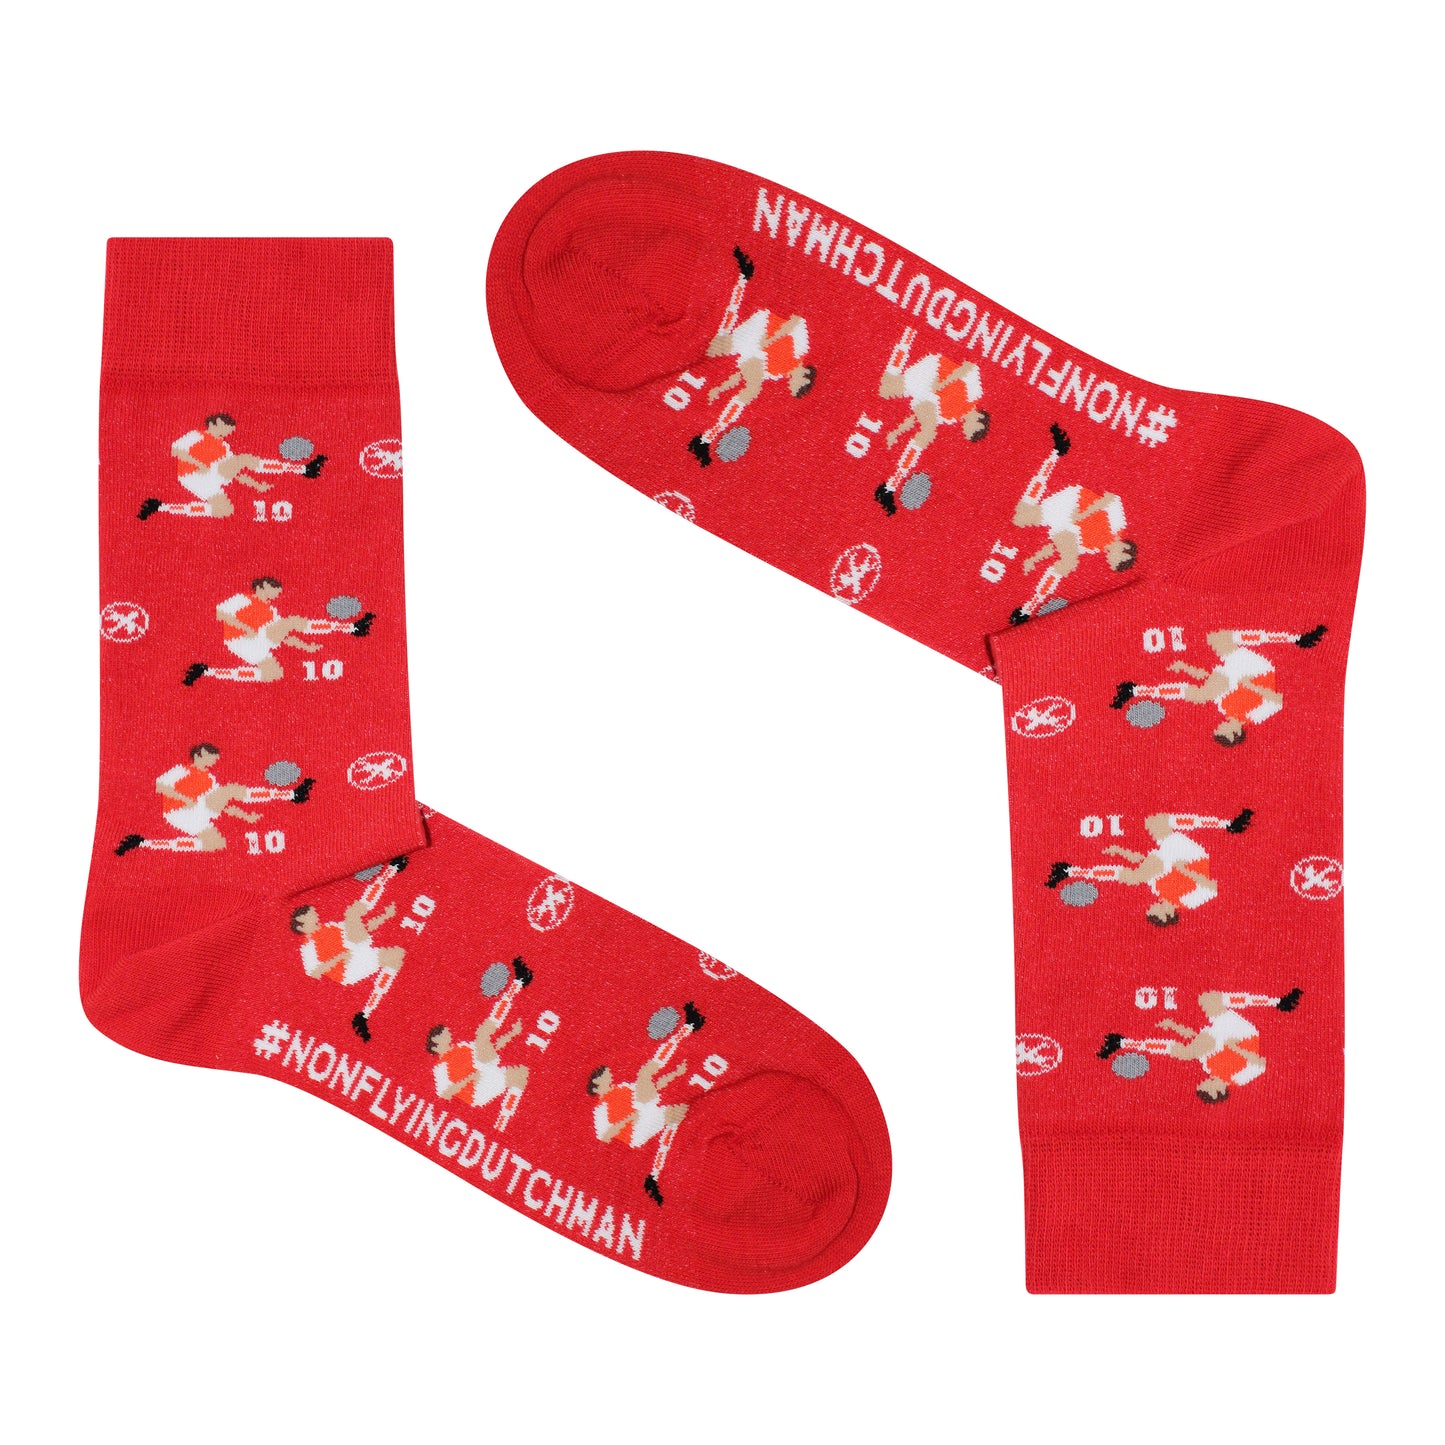 Bergkamp 'The No Flying Dutchman' | Retro Shirt Socks | Red | Size UK 7 - 11